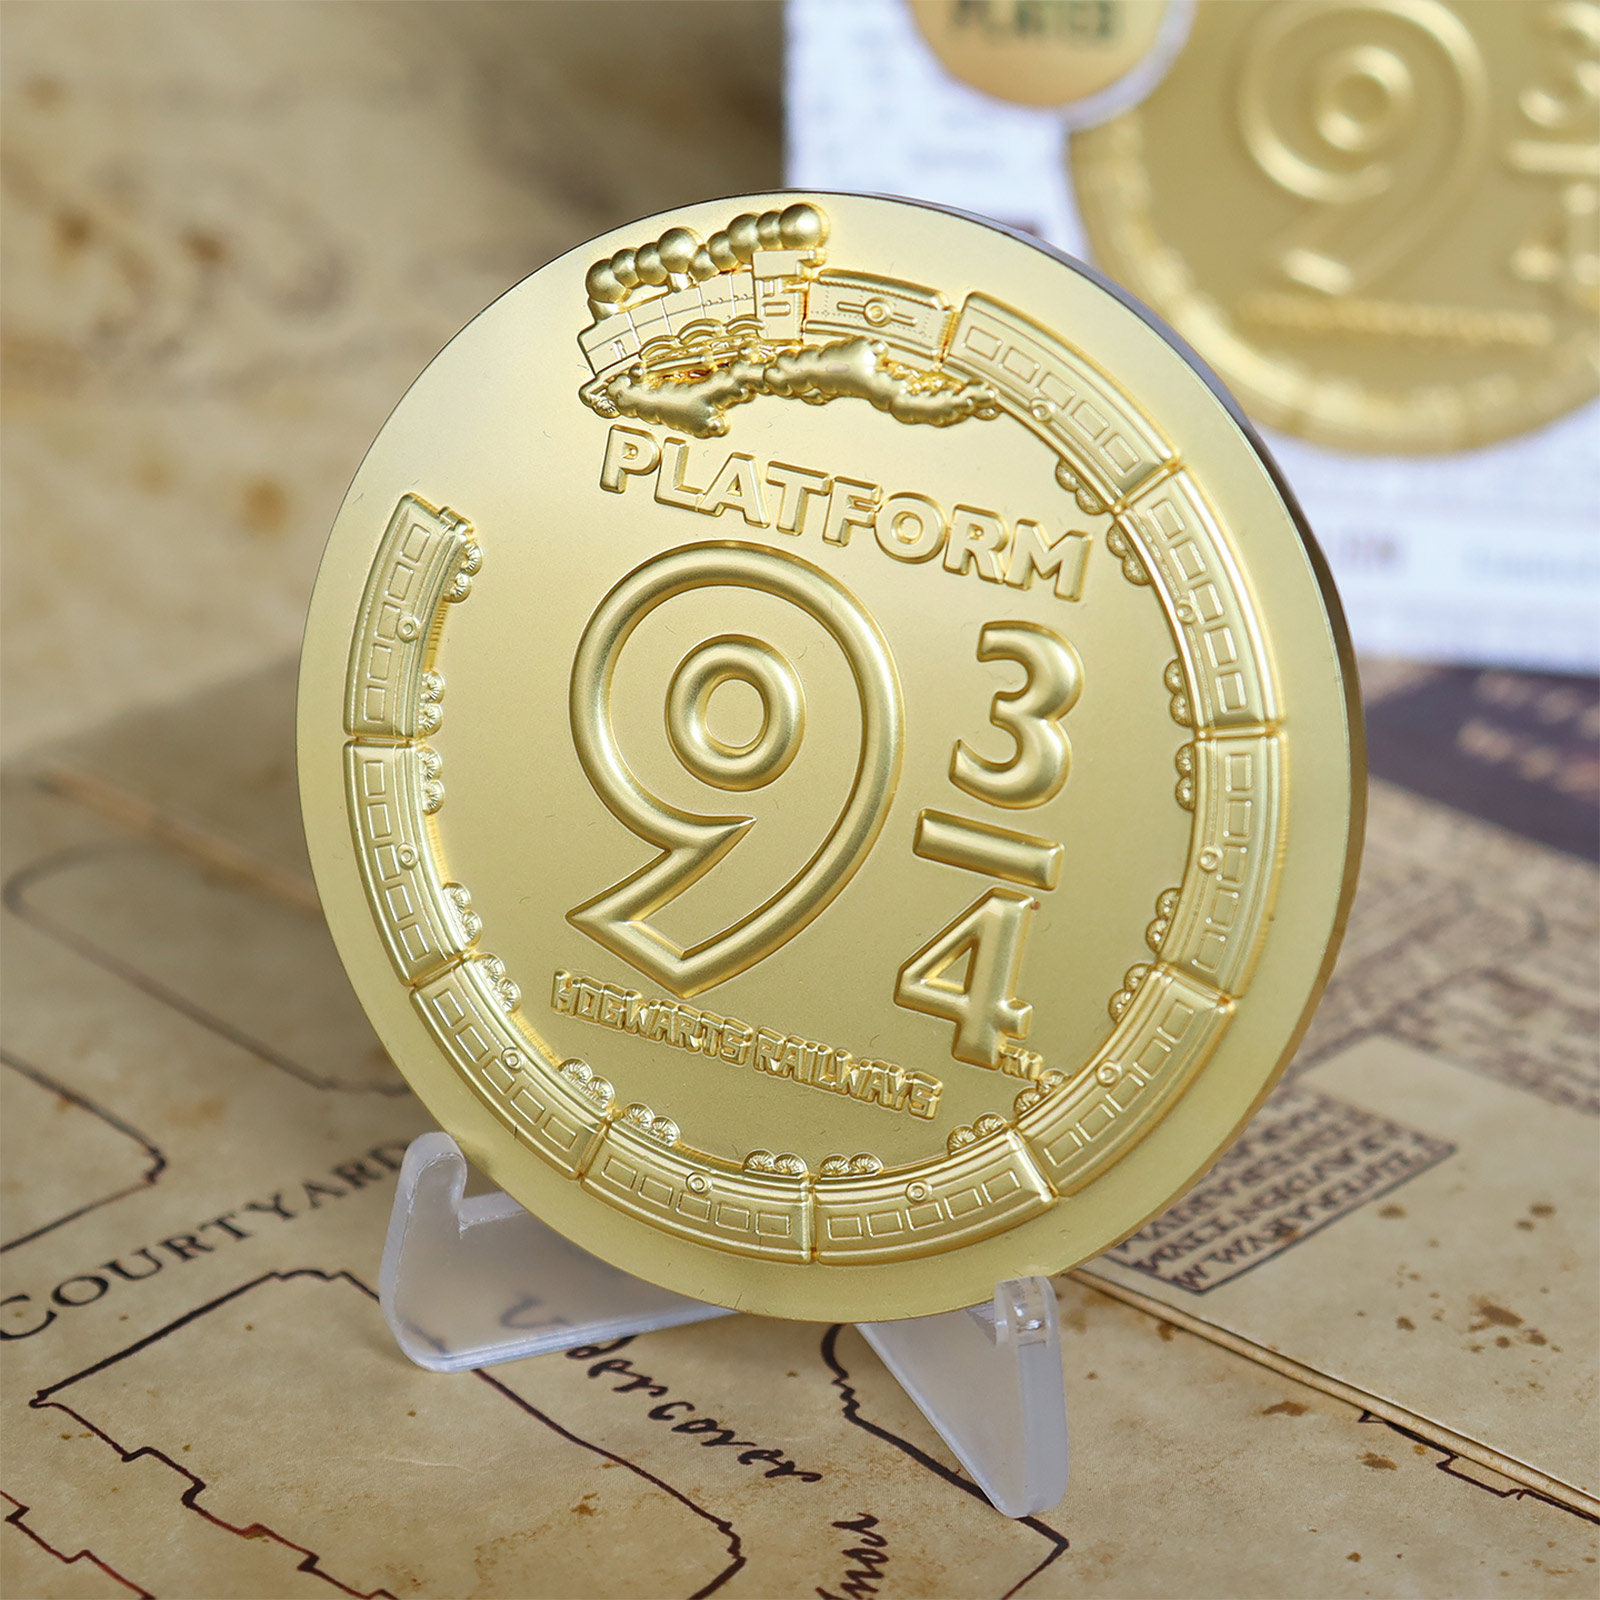 Harry Potter - 9 3/4 Hogwarts Express Medallion